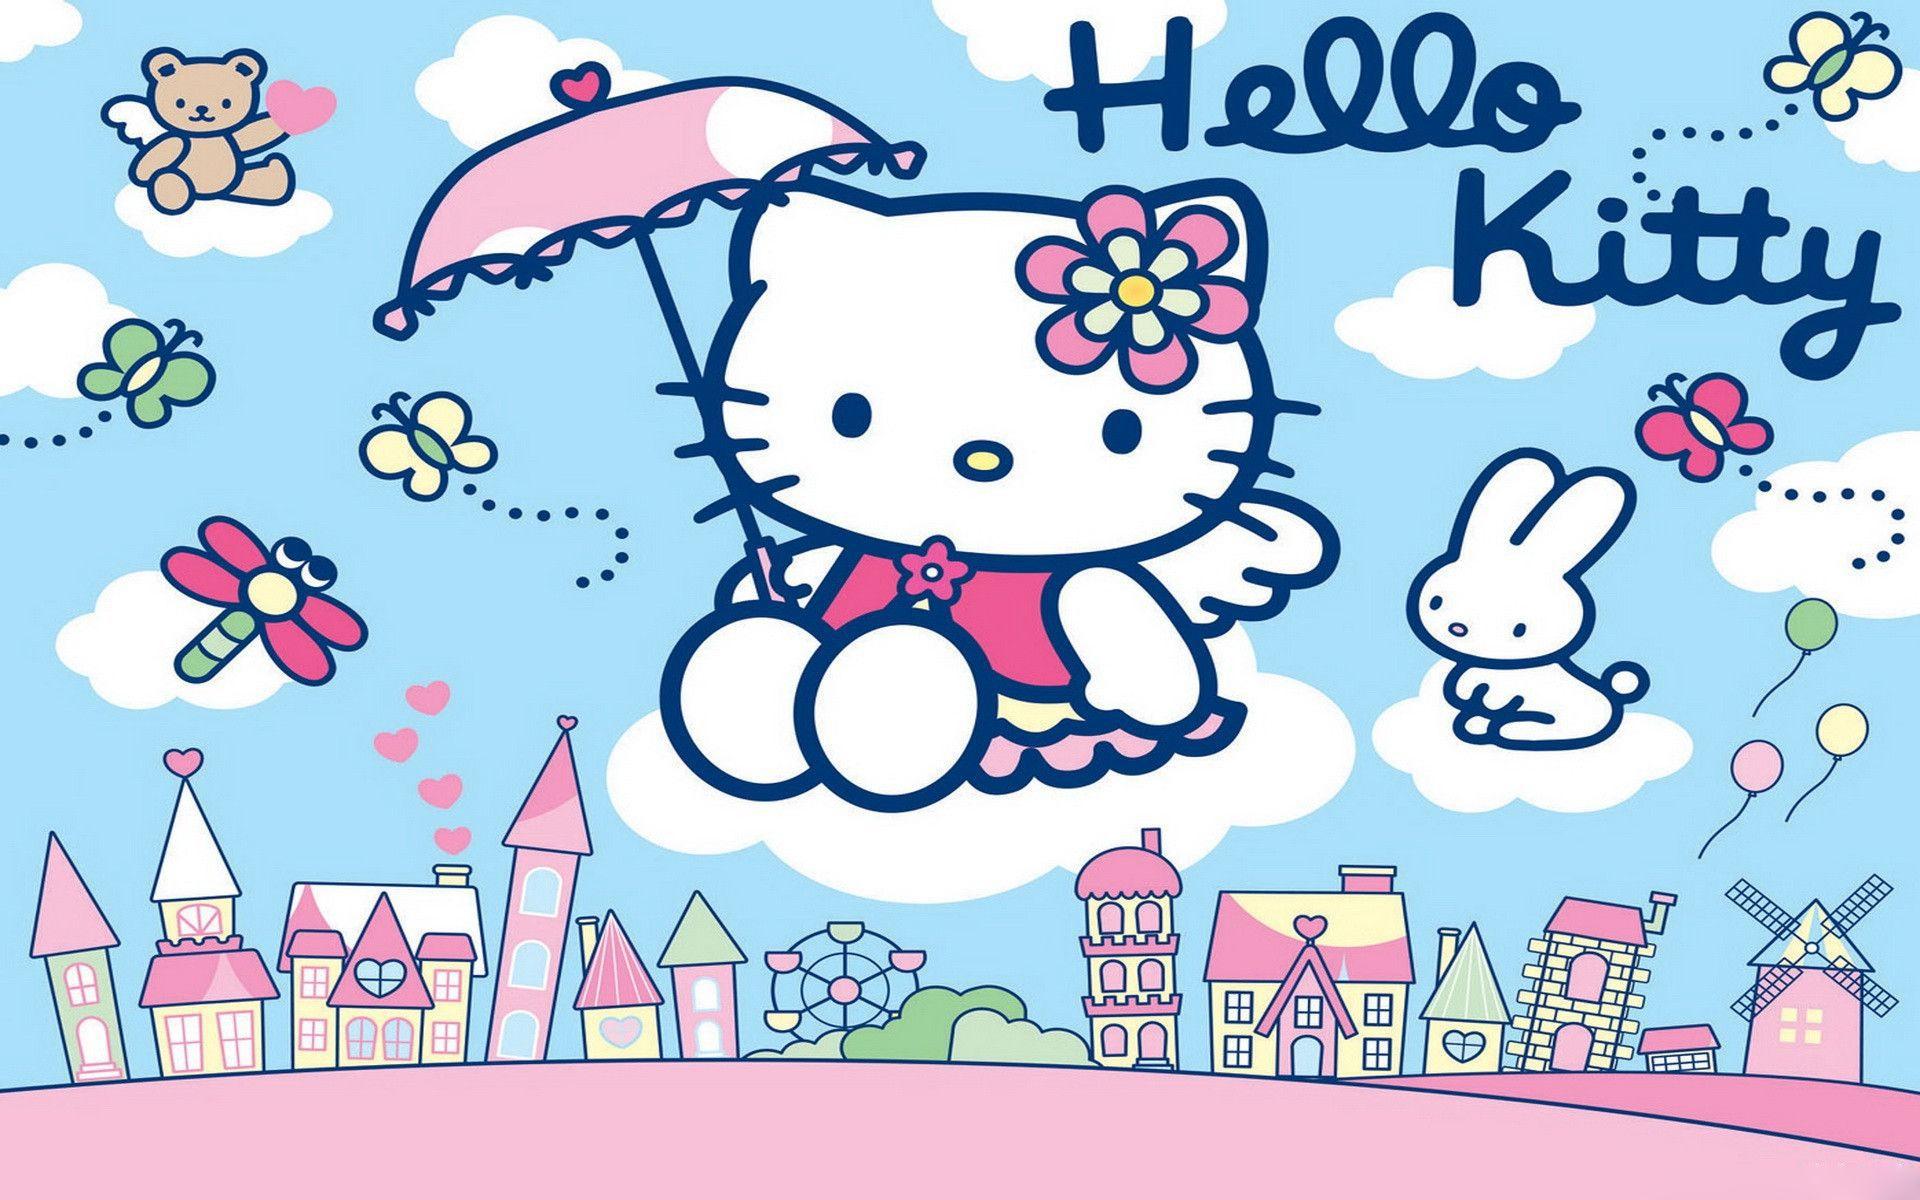 Wallpaper.wiki Hello Kitty Wallpaper HD Free Download PIC WPB001483